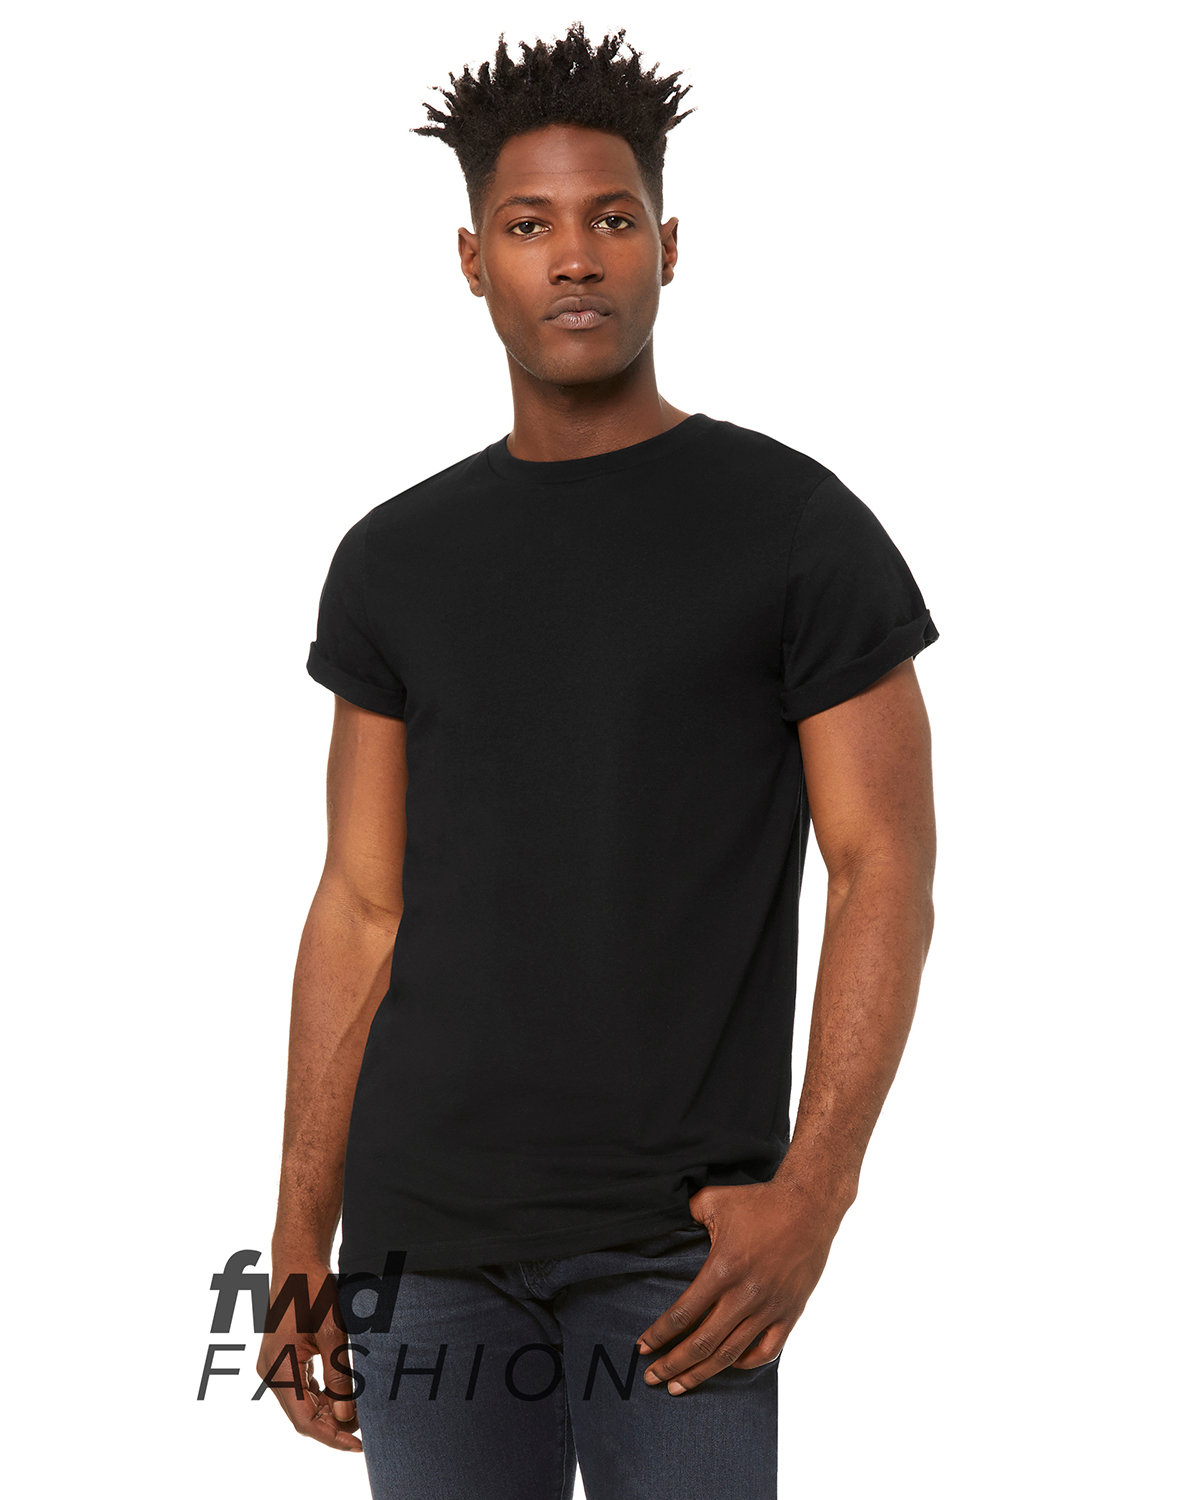 Bella + Canvas FWD Fashion Unisex Jersey Rolled Cuff T-Shirt BLACK 